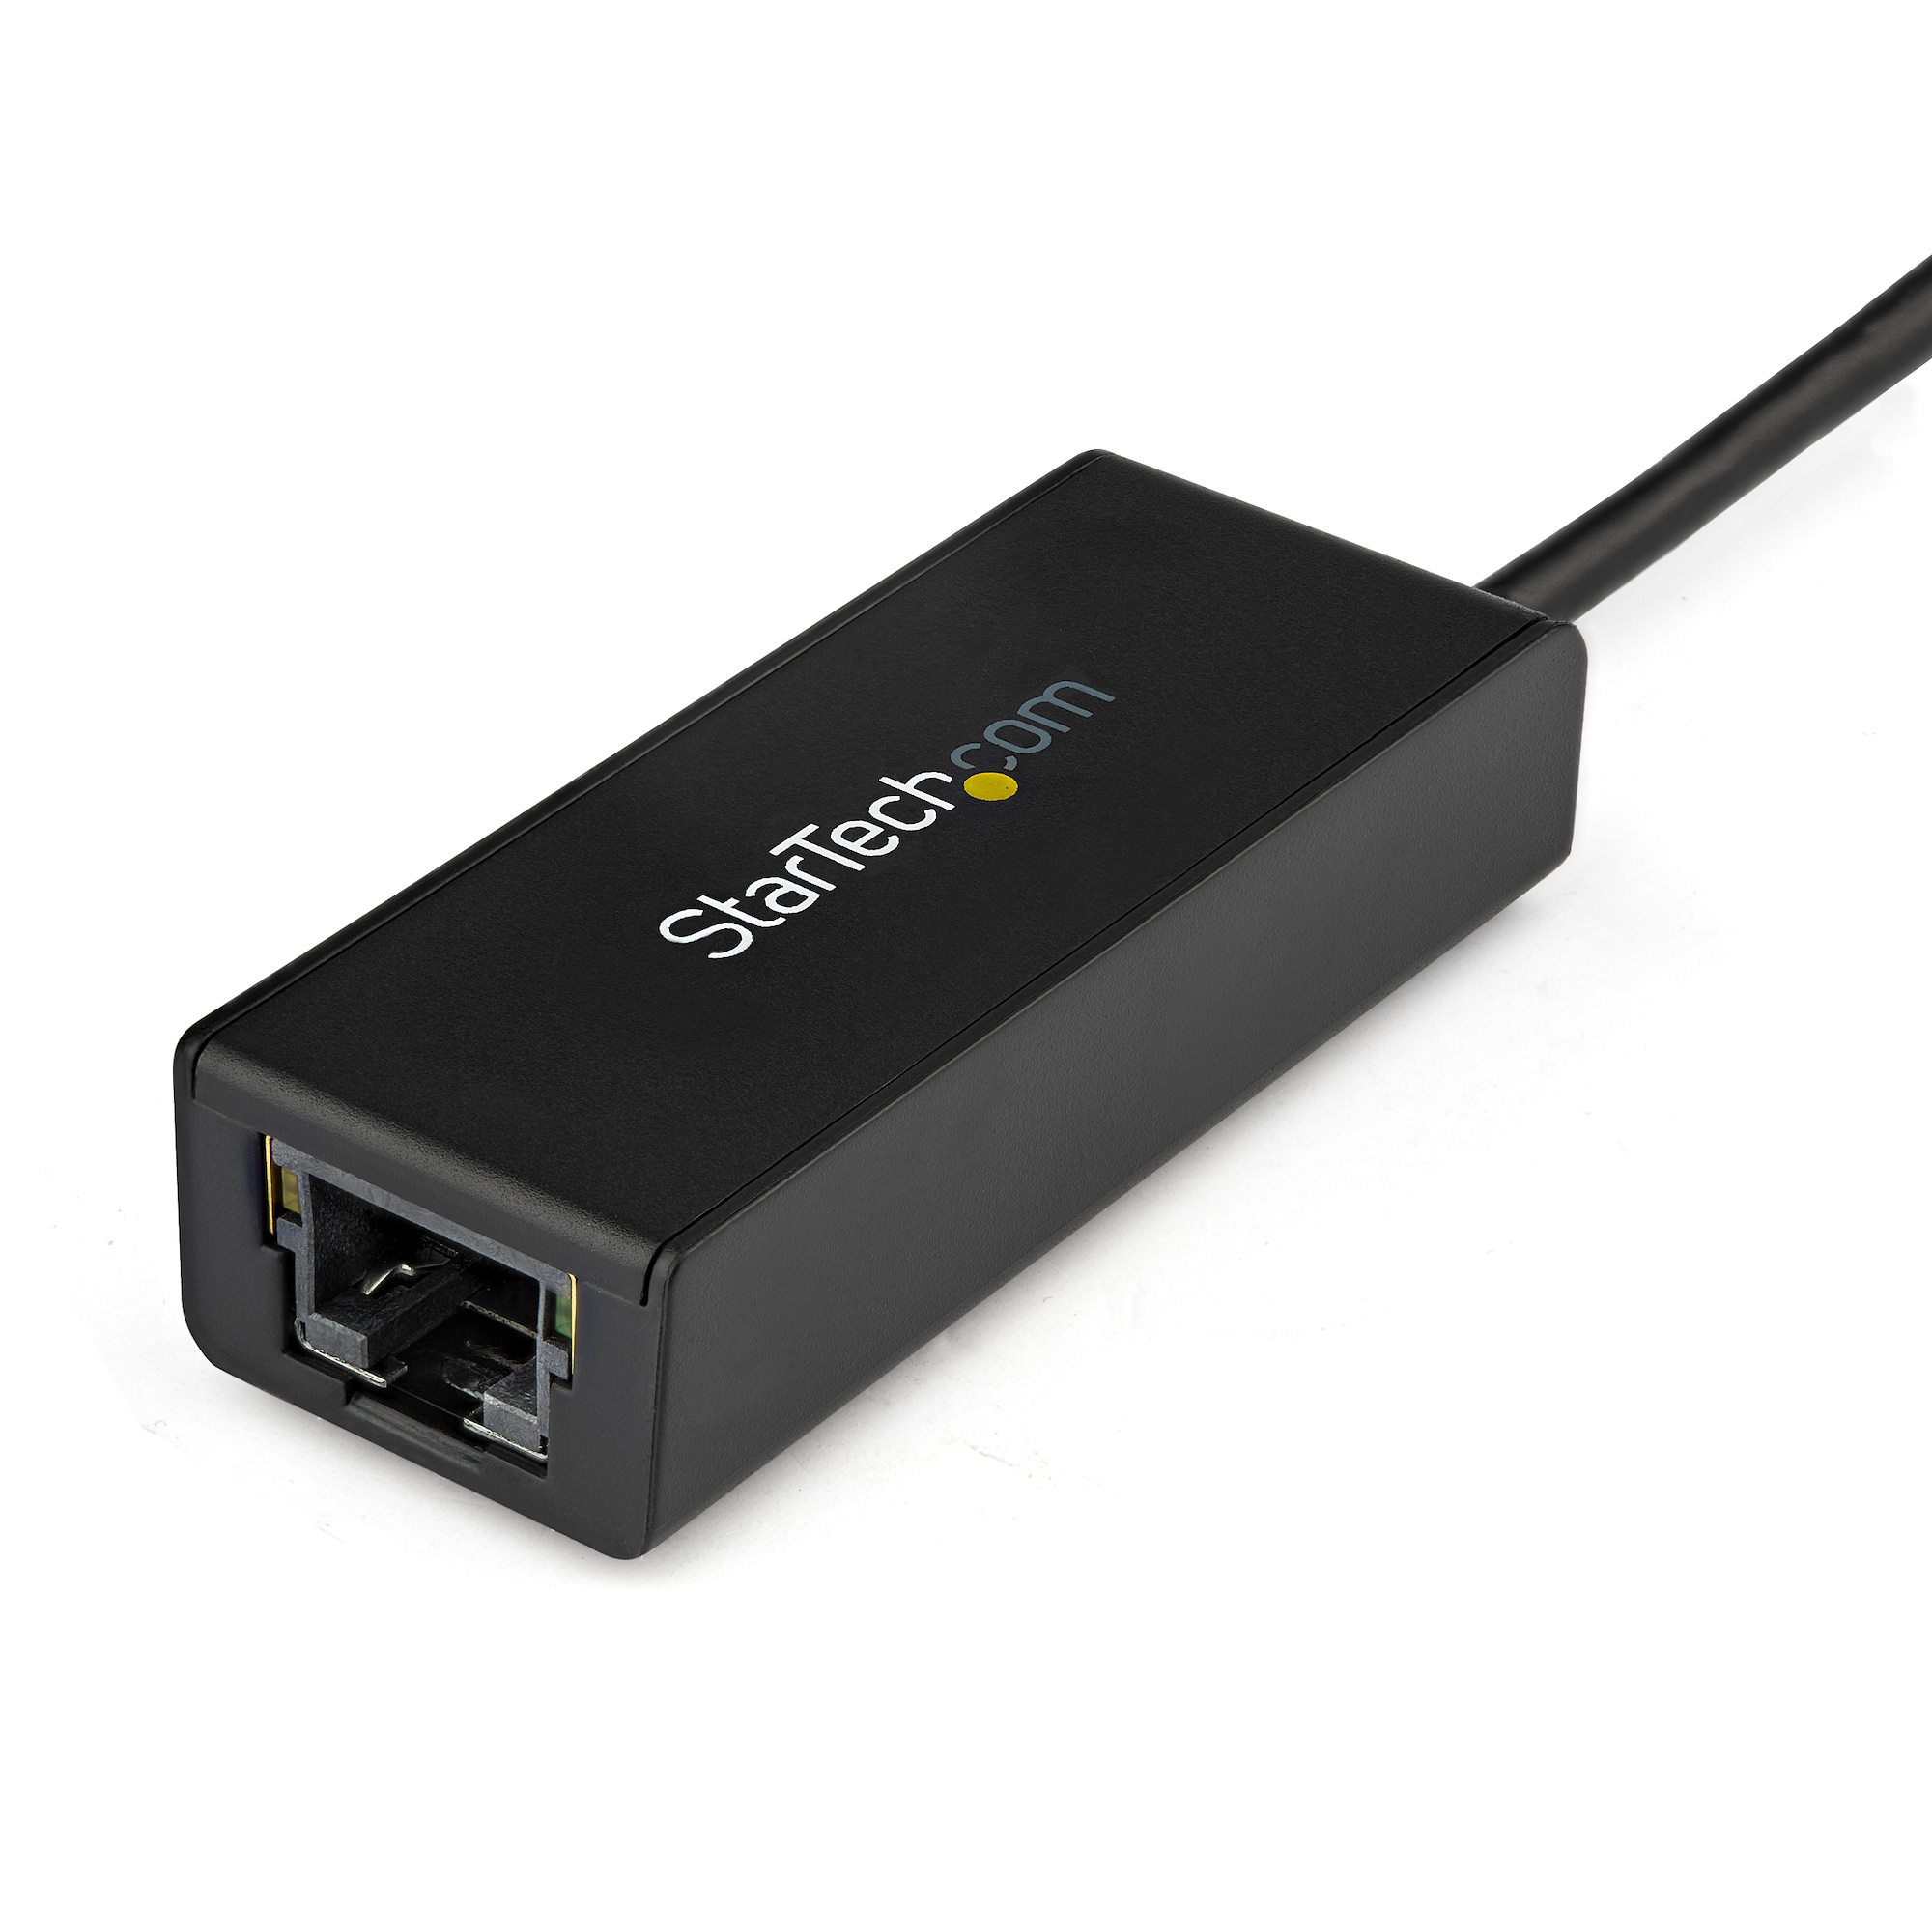 10/100/1000 NIC Network Adapter USB 3.0 Laptop to RJ45 LAN StarTech.com USB 3.0 to Gigabit Ethernet Adapter USB31000S 